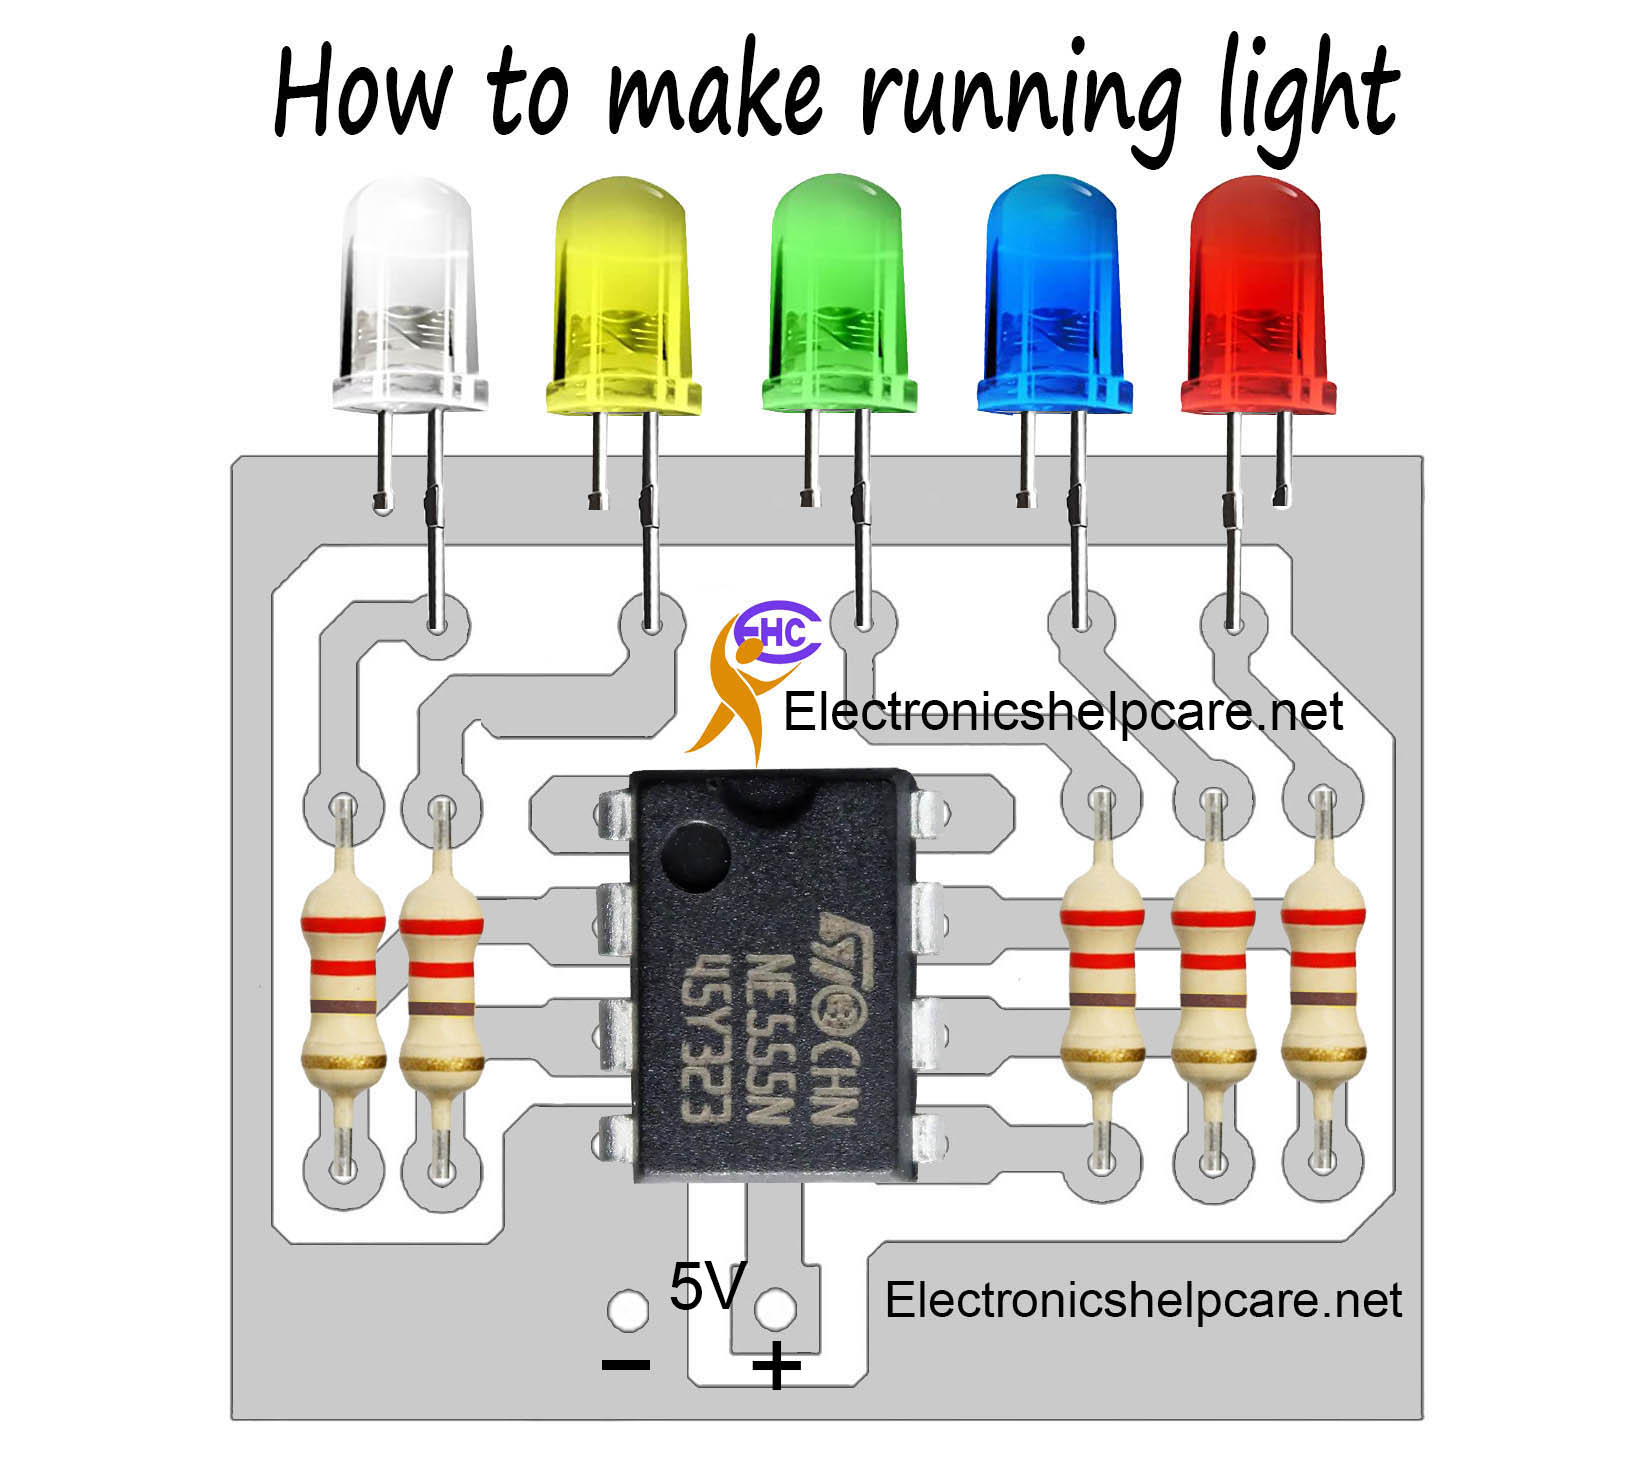 How to make running light